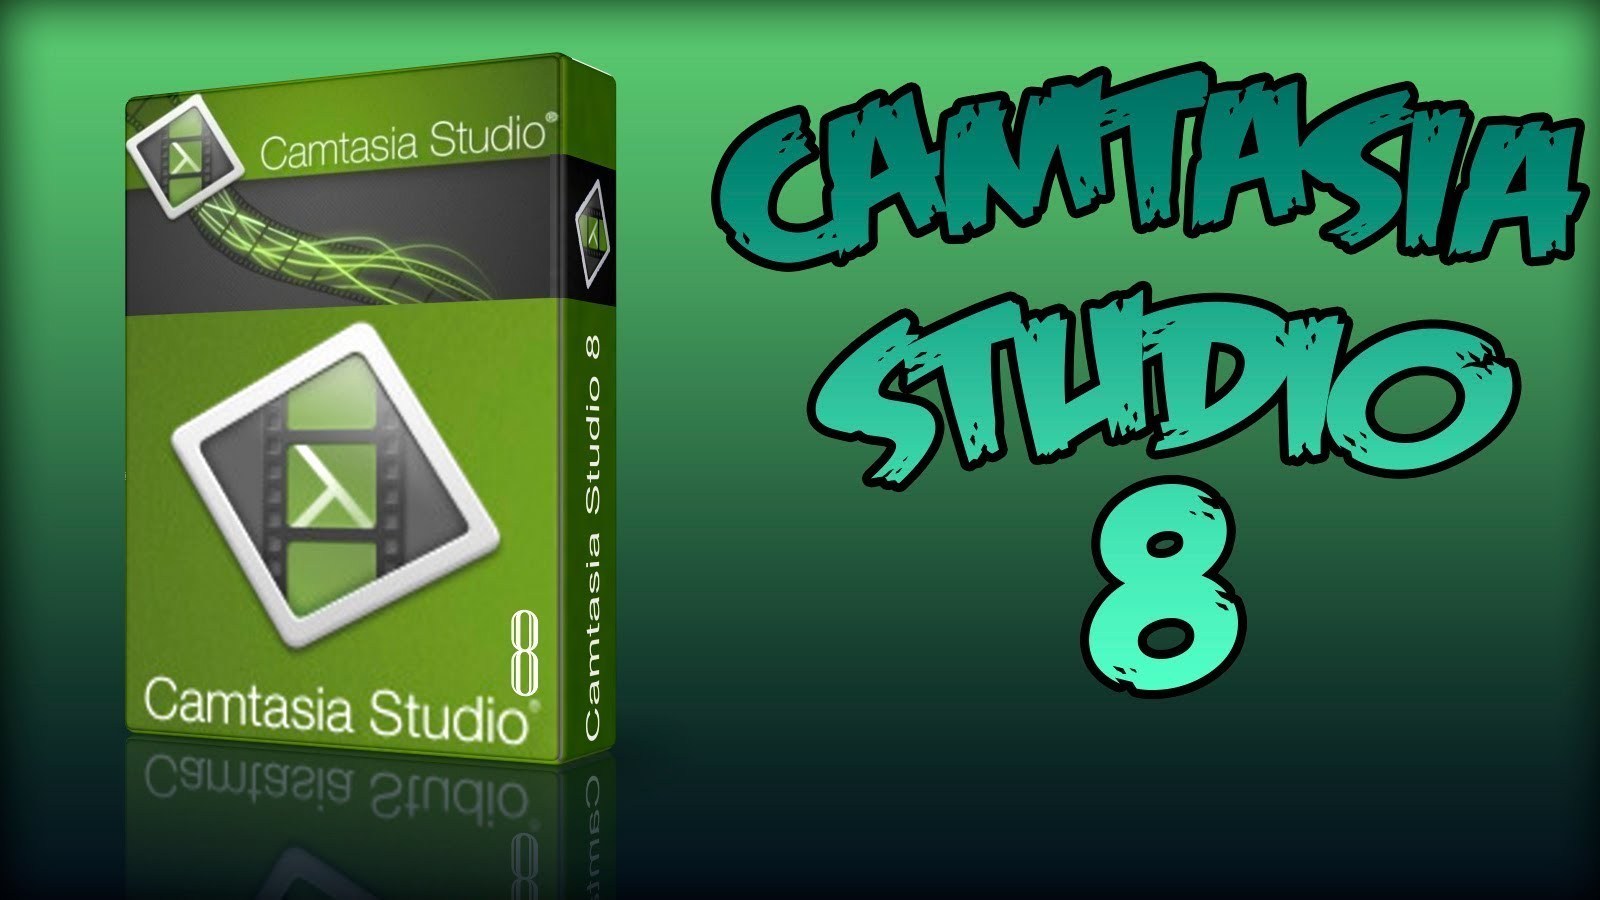 camtasia studio 8 key and name free 2016